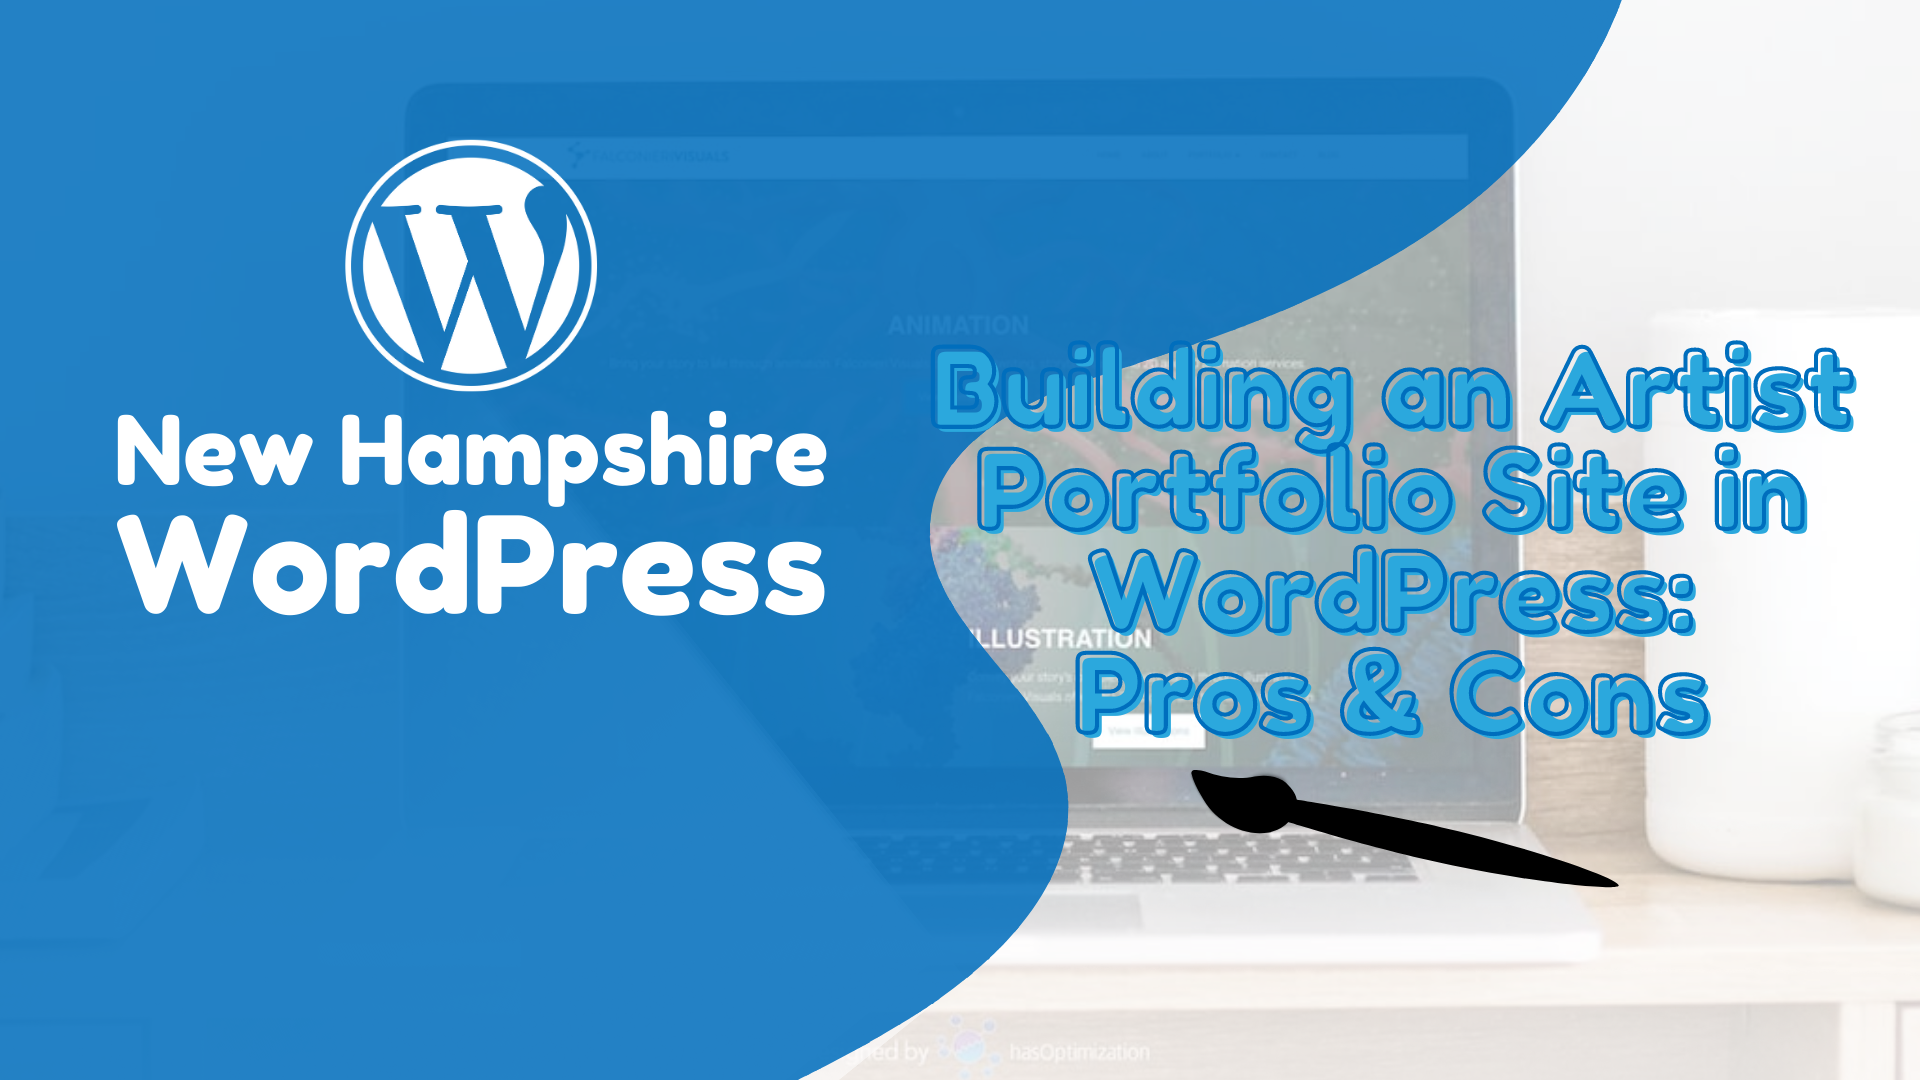 Presentation: Pros &#038; Cons of Building Your Art Portfolio in WordPress